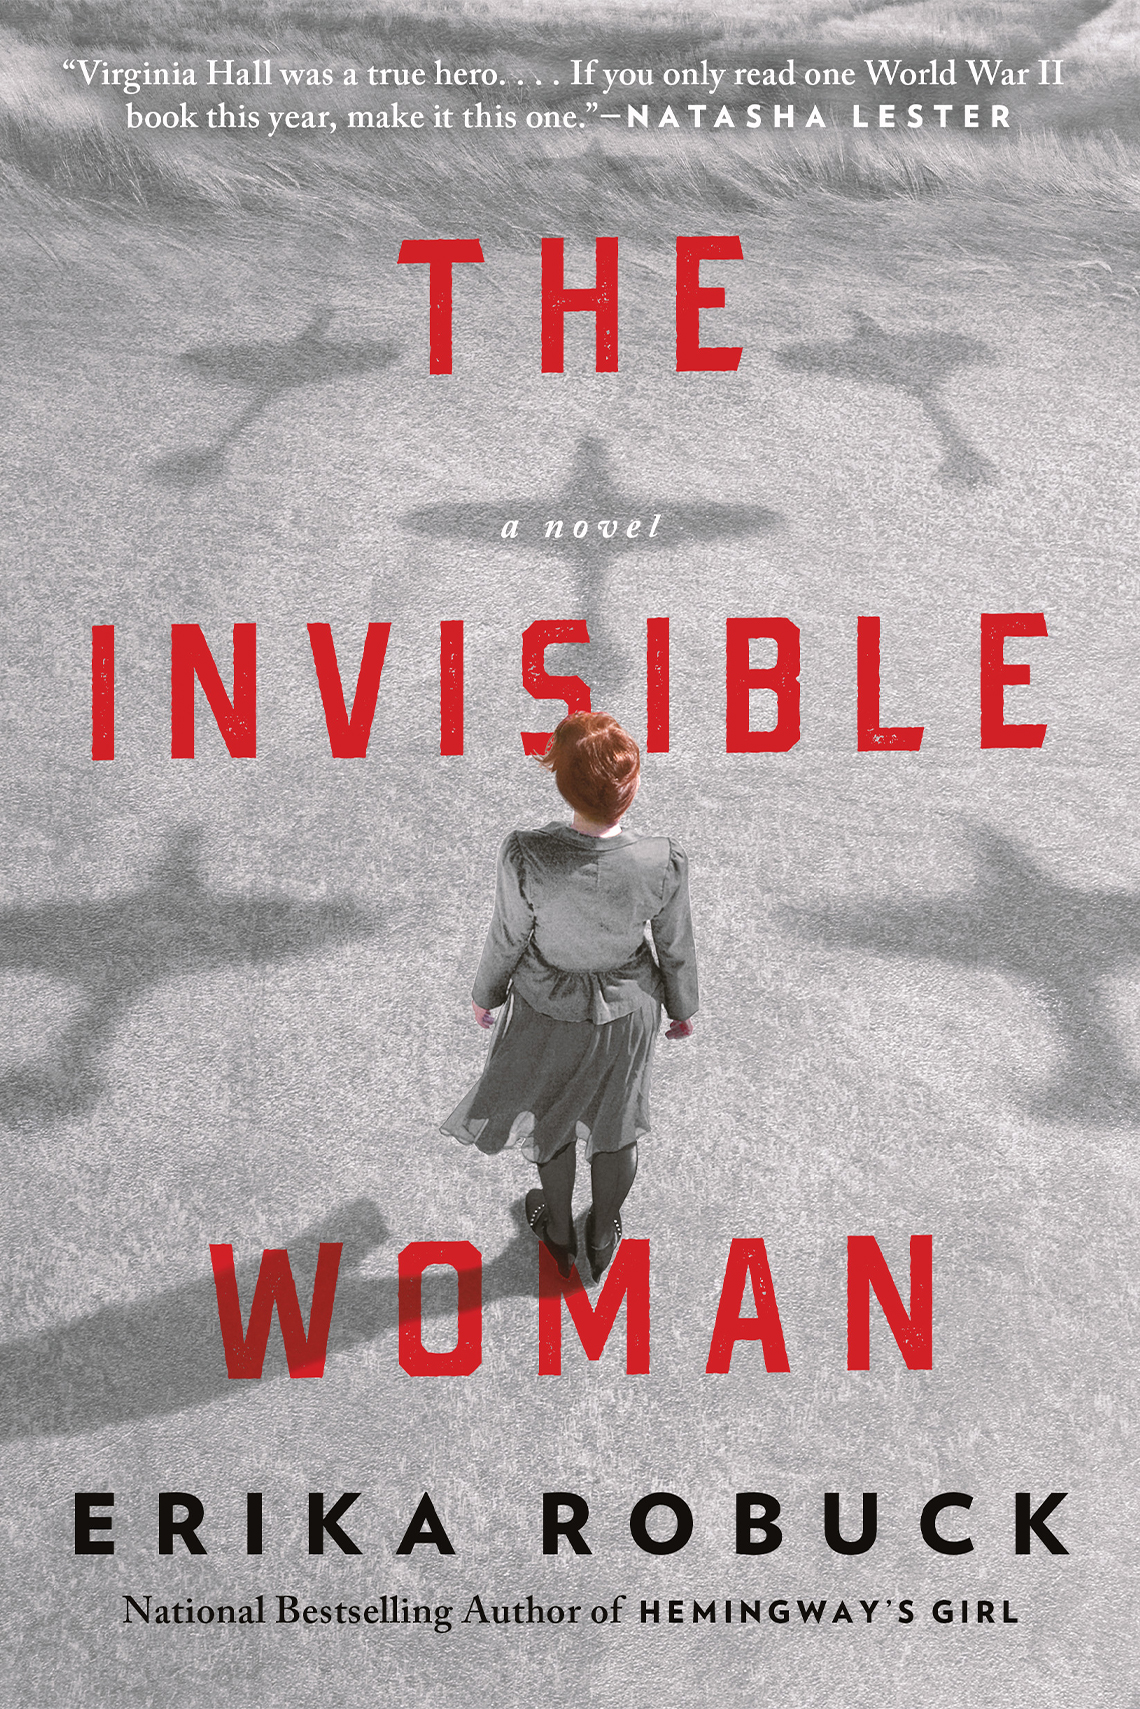 Portada del libro The Invisible Woman de Erika Robuck.